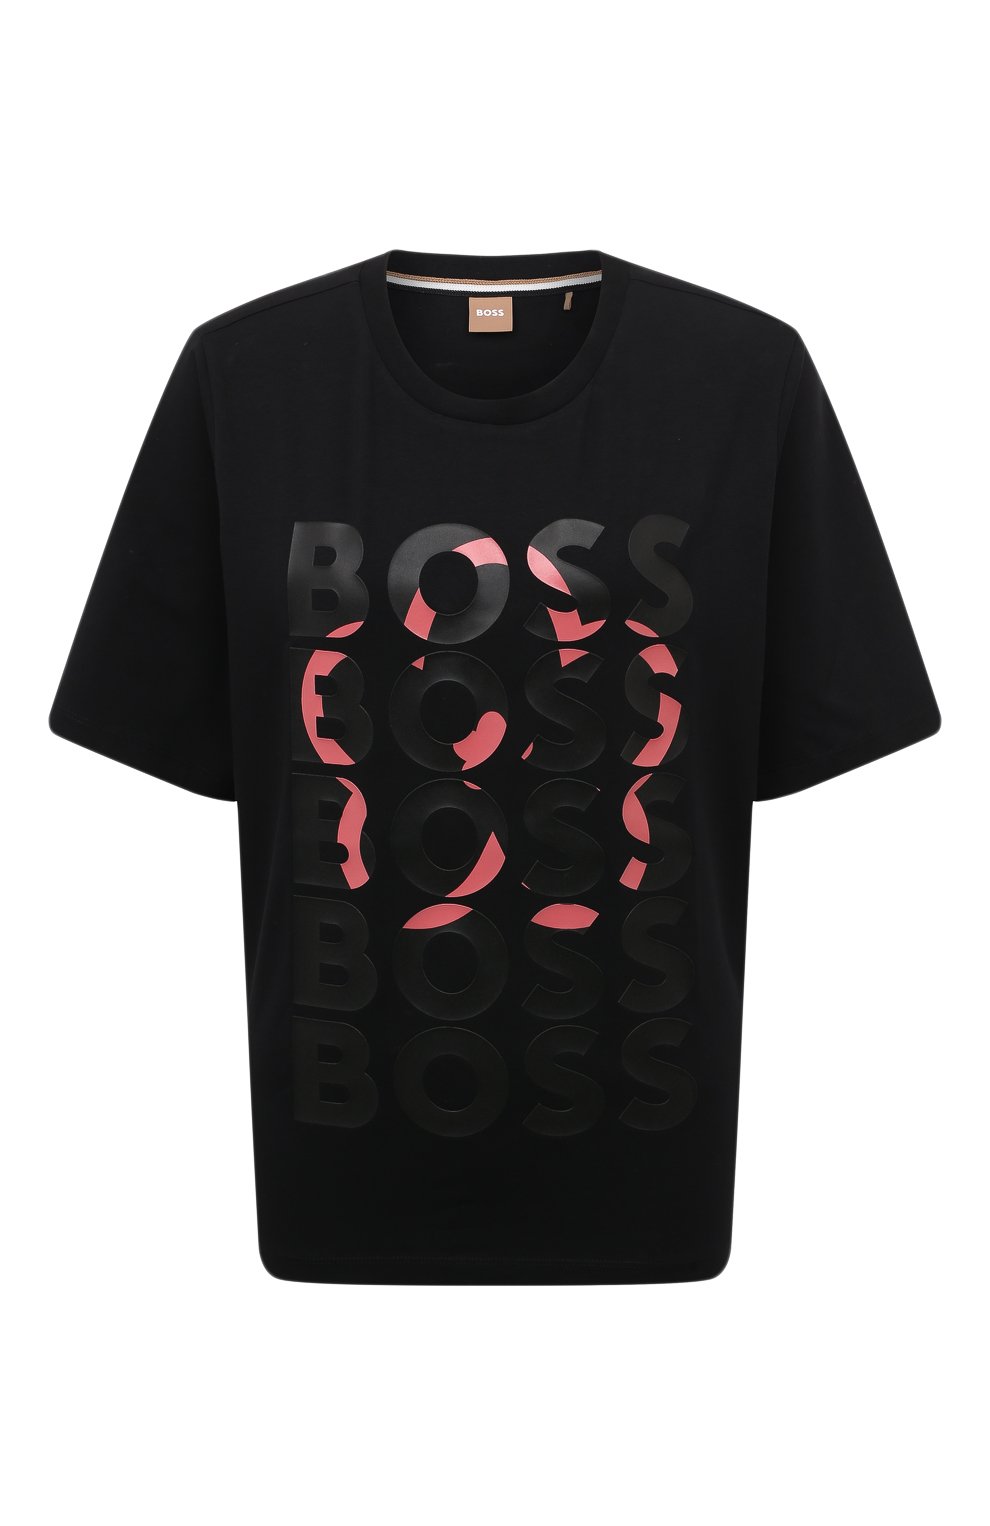 Хлопковая футболка BOSS 50496497, цвет чёрный, размер 48